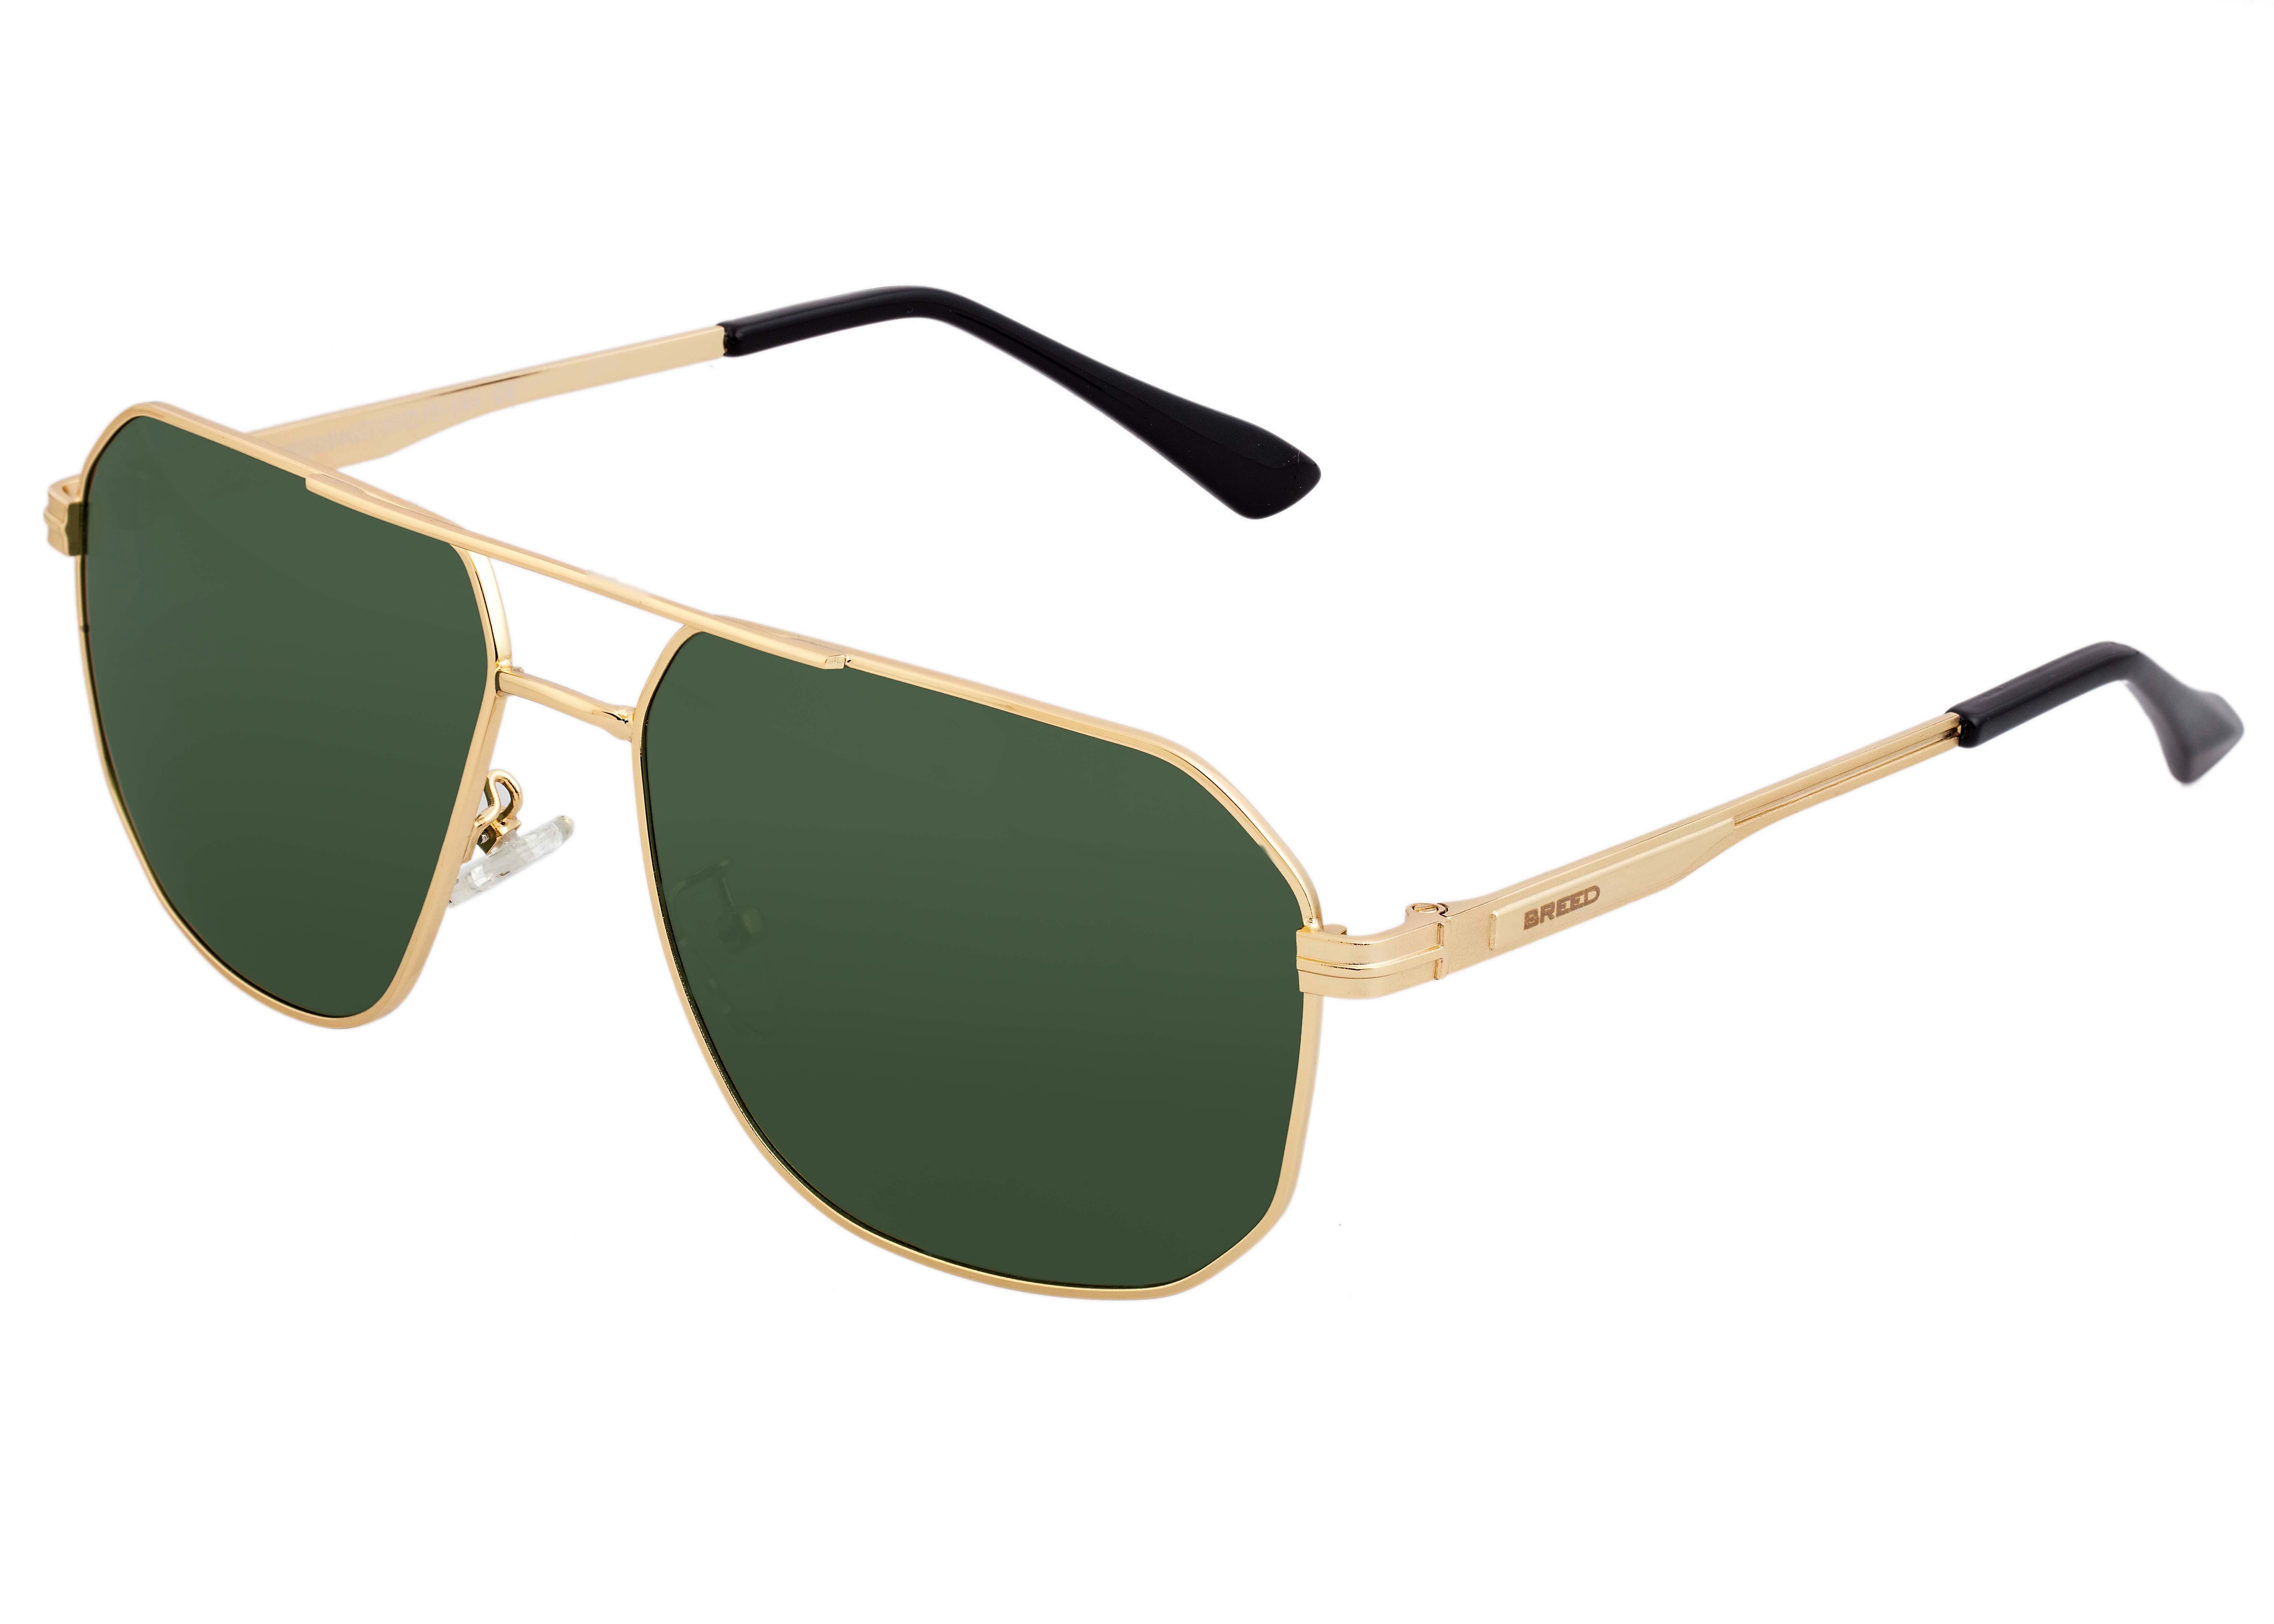 Breed Sunglasses Norma Polarized Sunglasses - Men's, Gold/Black, One ...